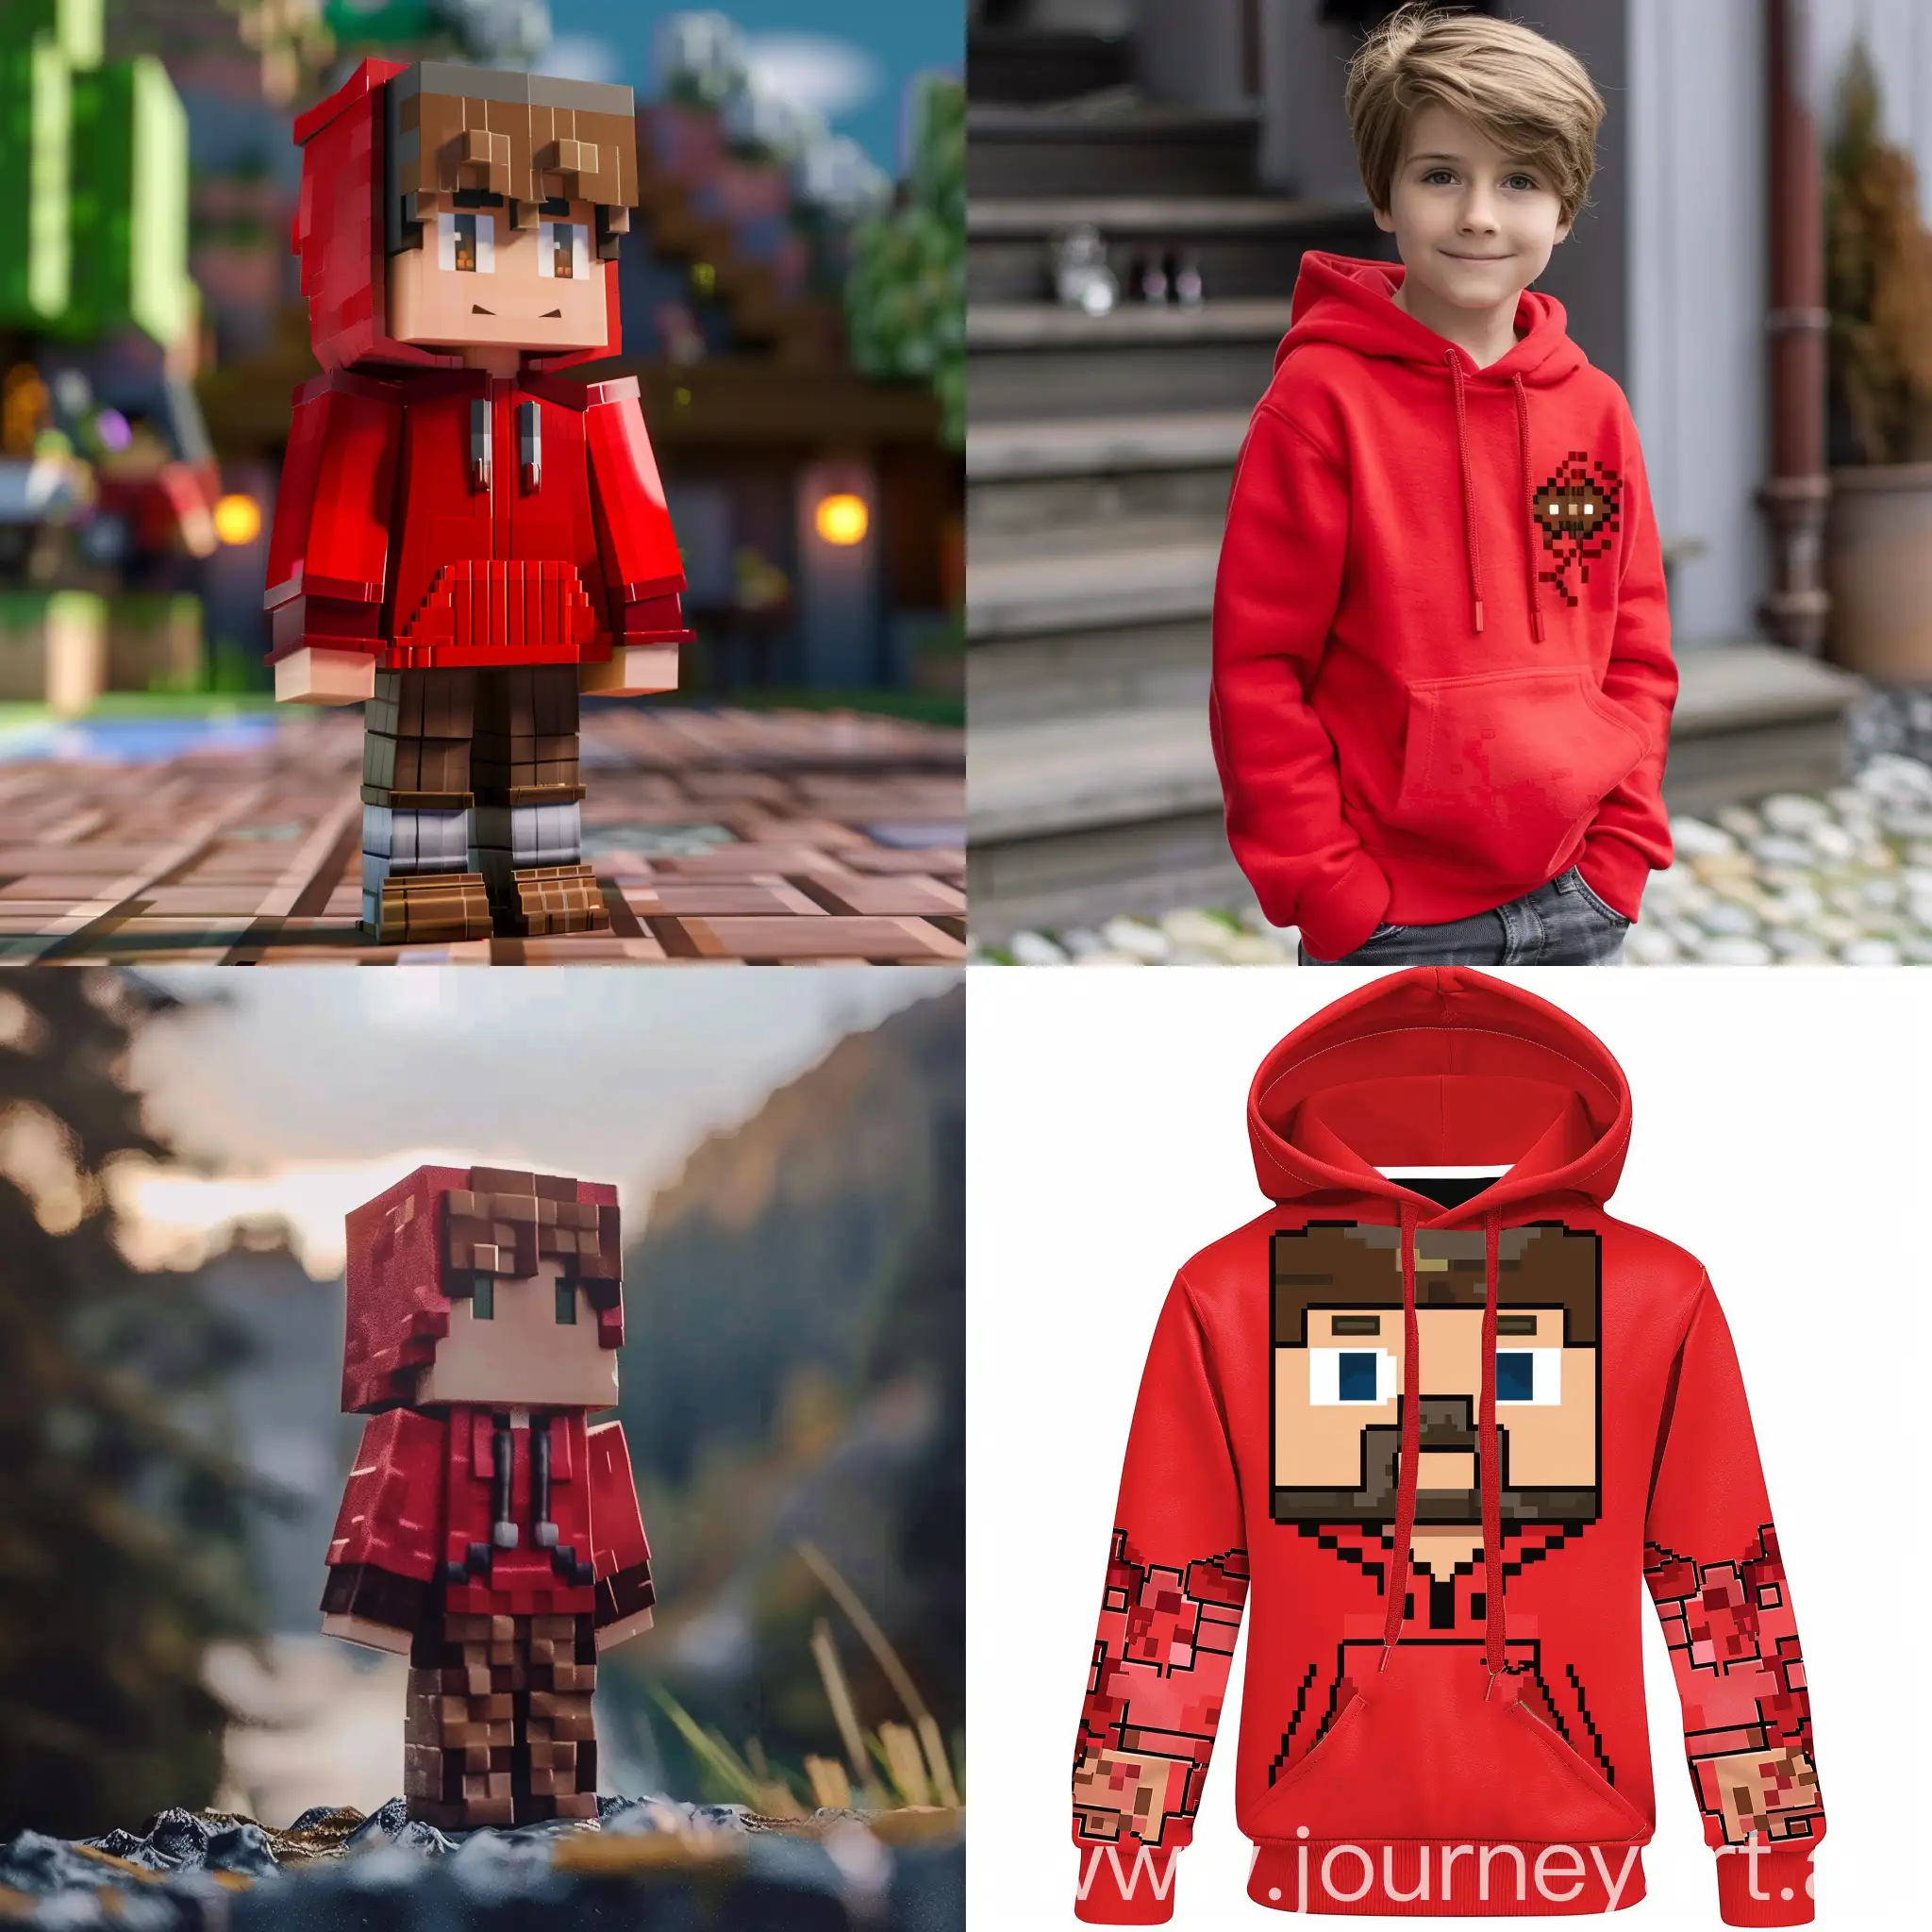 MinecraftInspired-Red-Hoodie-Boy-Pixelated-Adventure